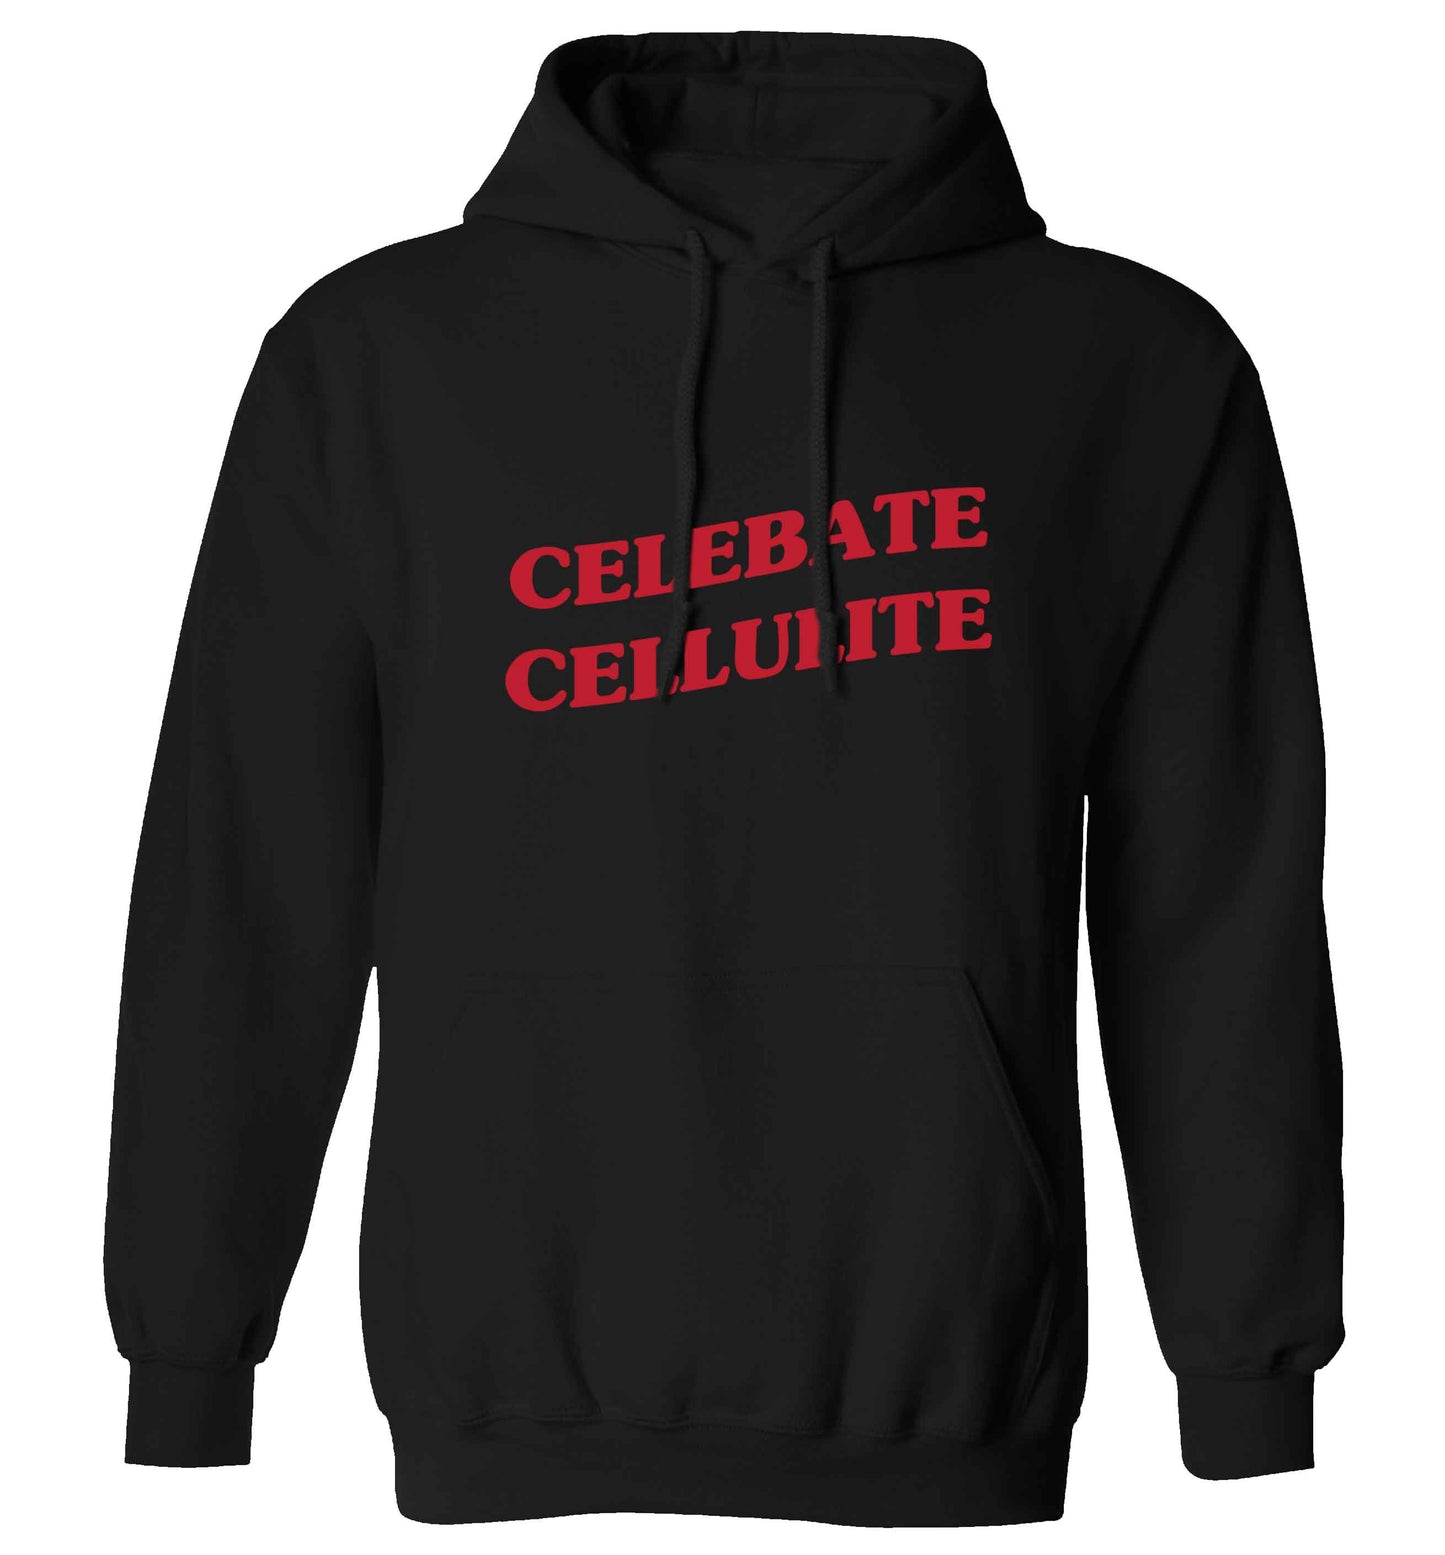 Celebrate cellulite adults unisex black hoodie 2XL